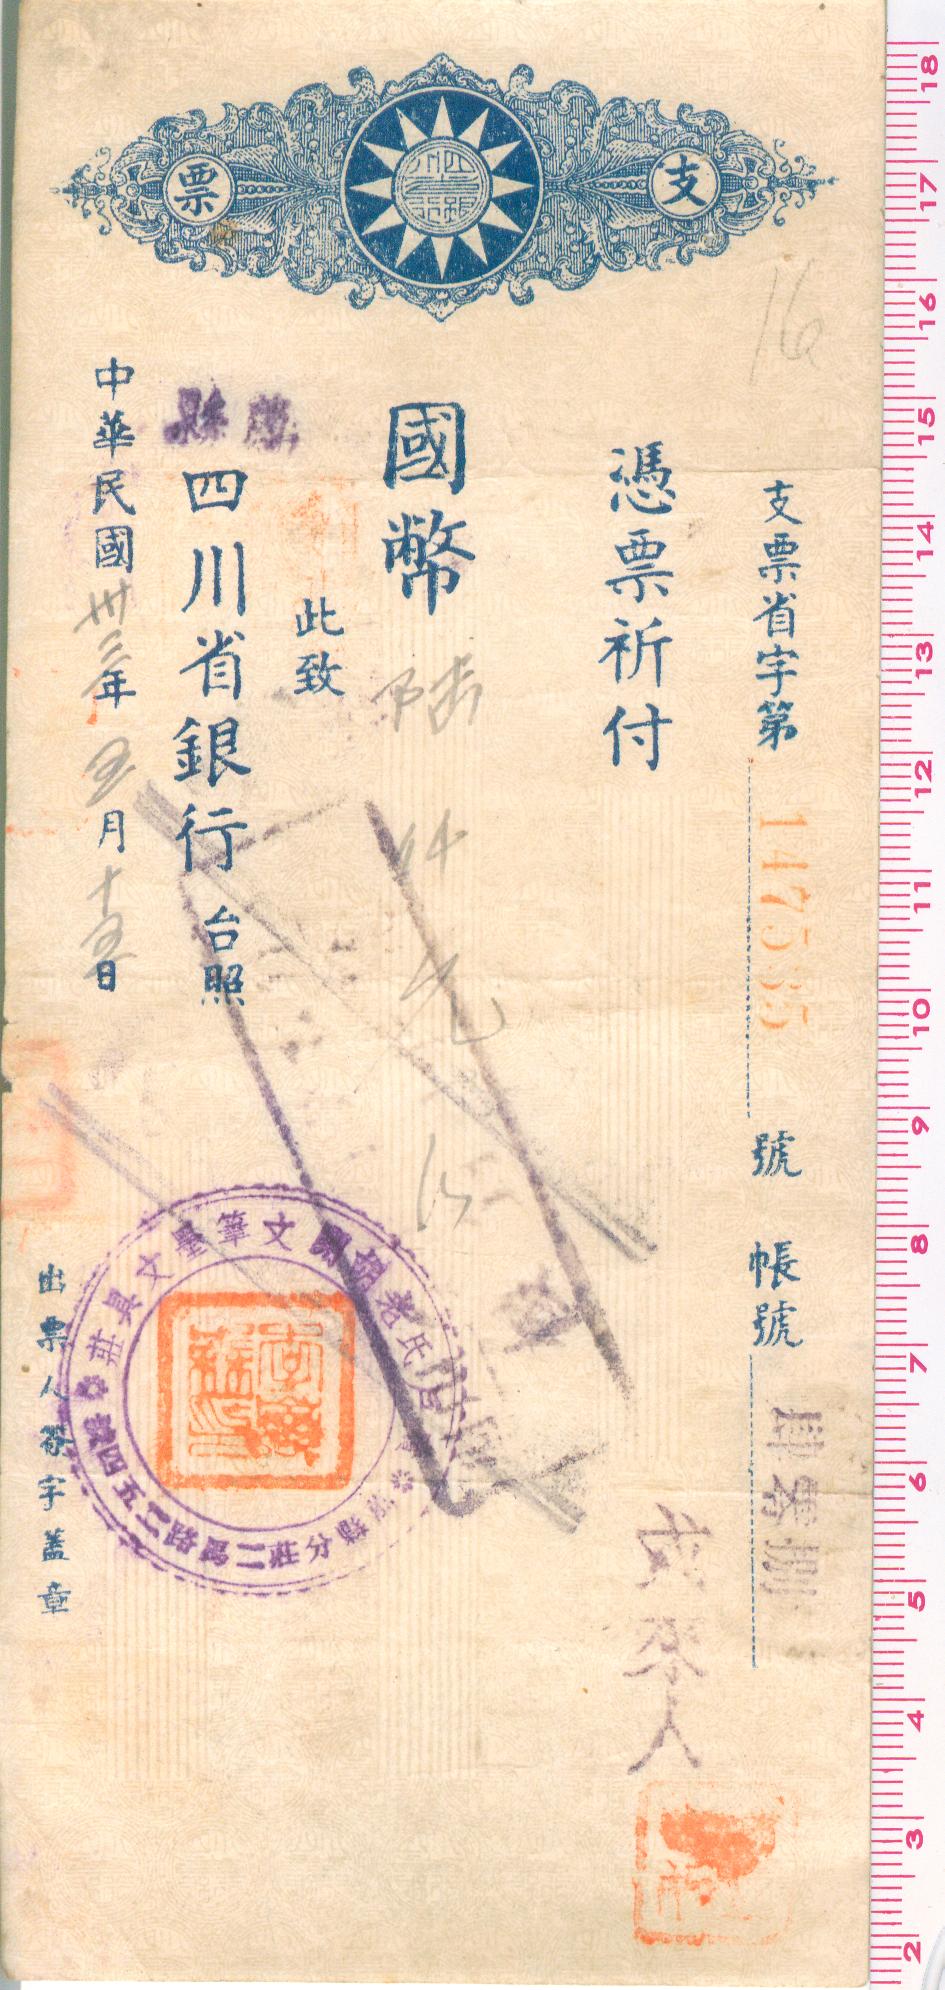 D2208, Check of the Bank of Szechuen, 1944 China